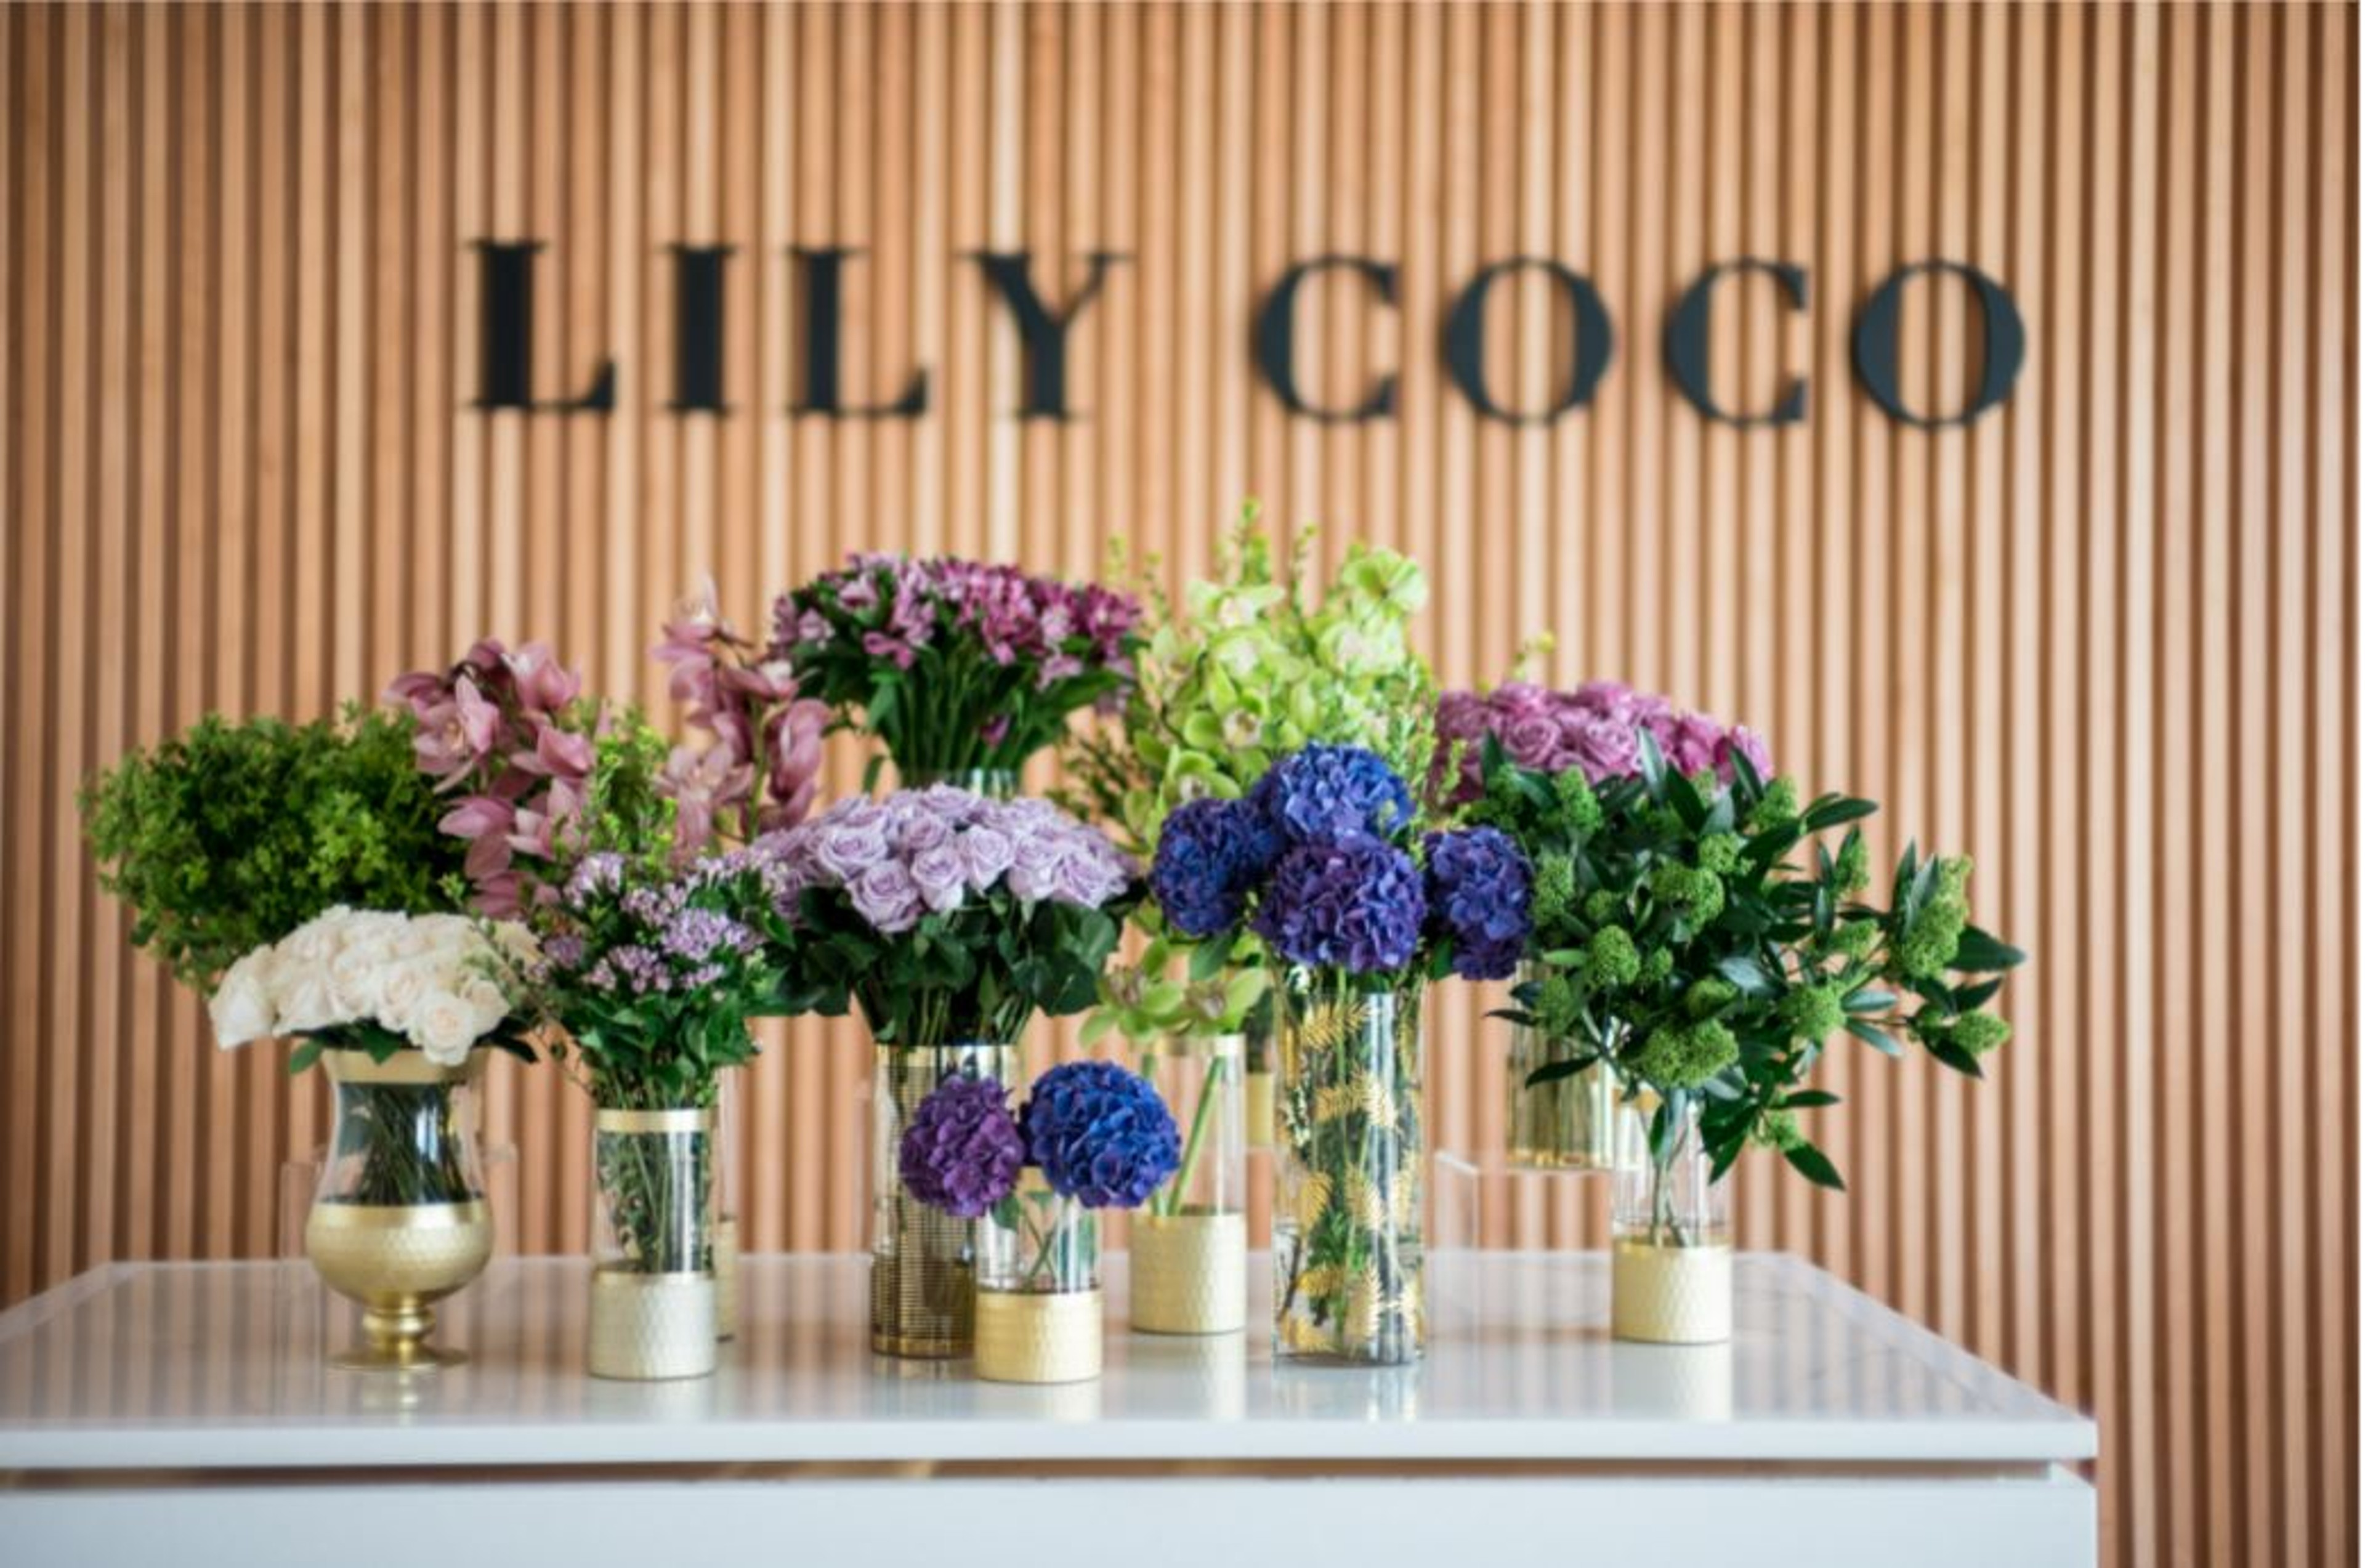 Lily Coco store photo